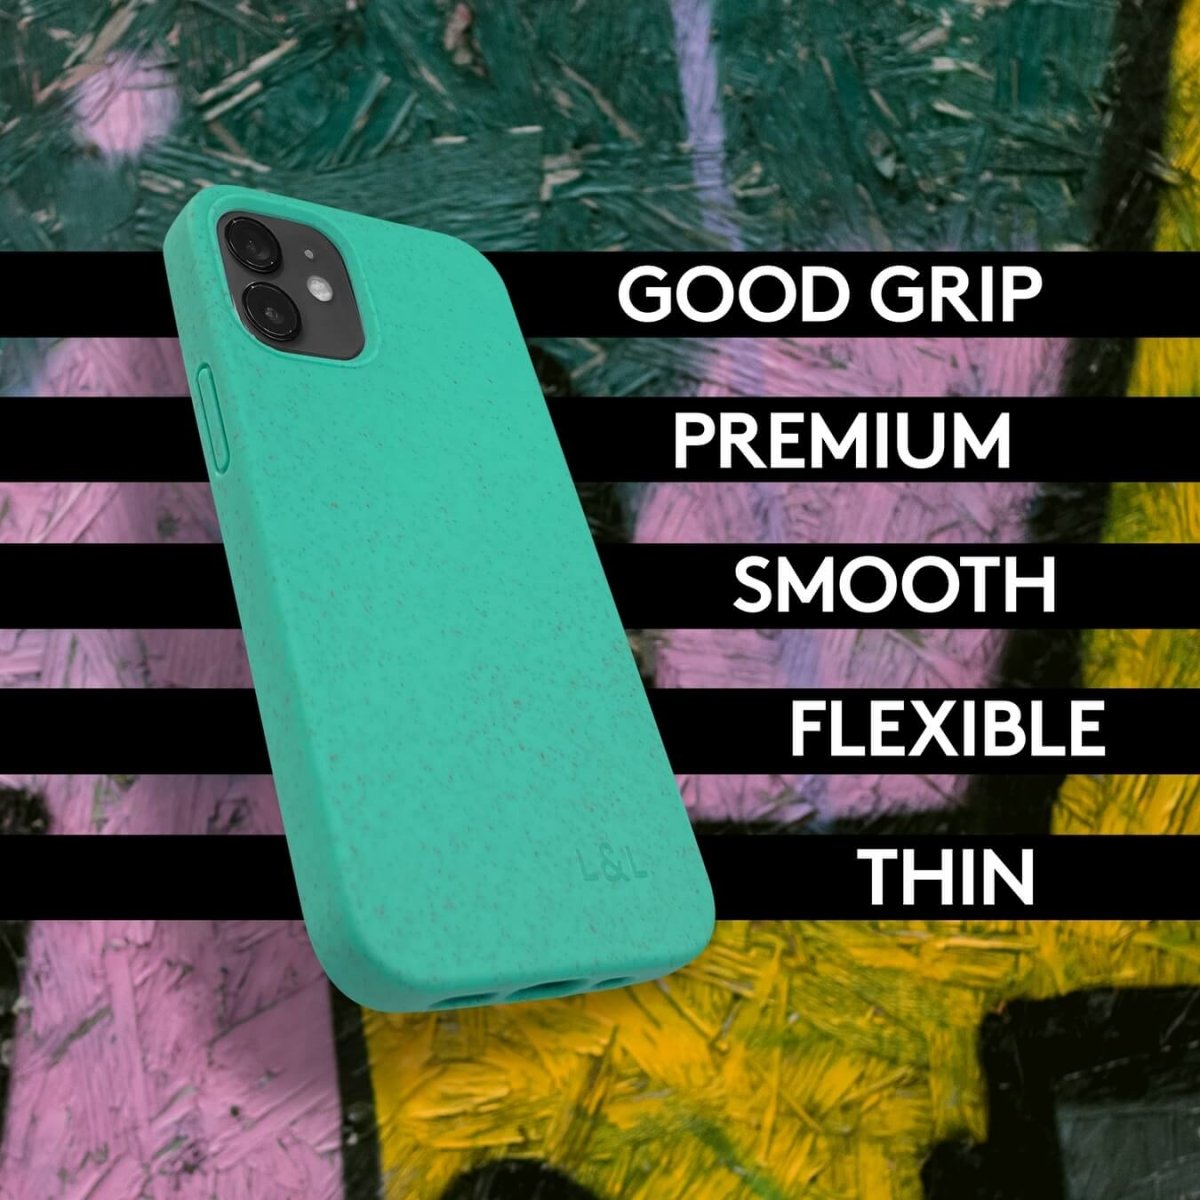 Sale - Biodegradable iPhone 12 Mini Case - Mint - Loam & Lore